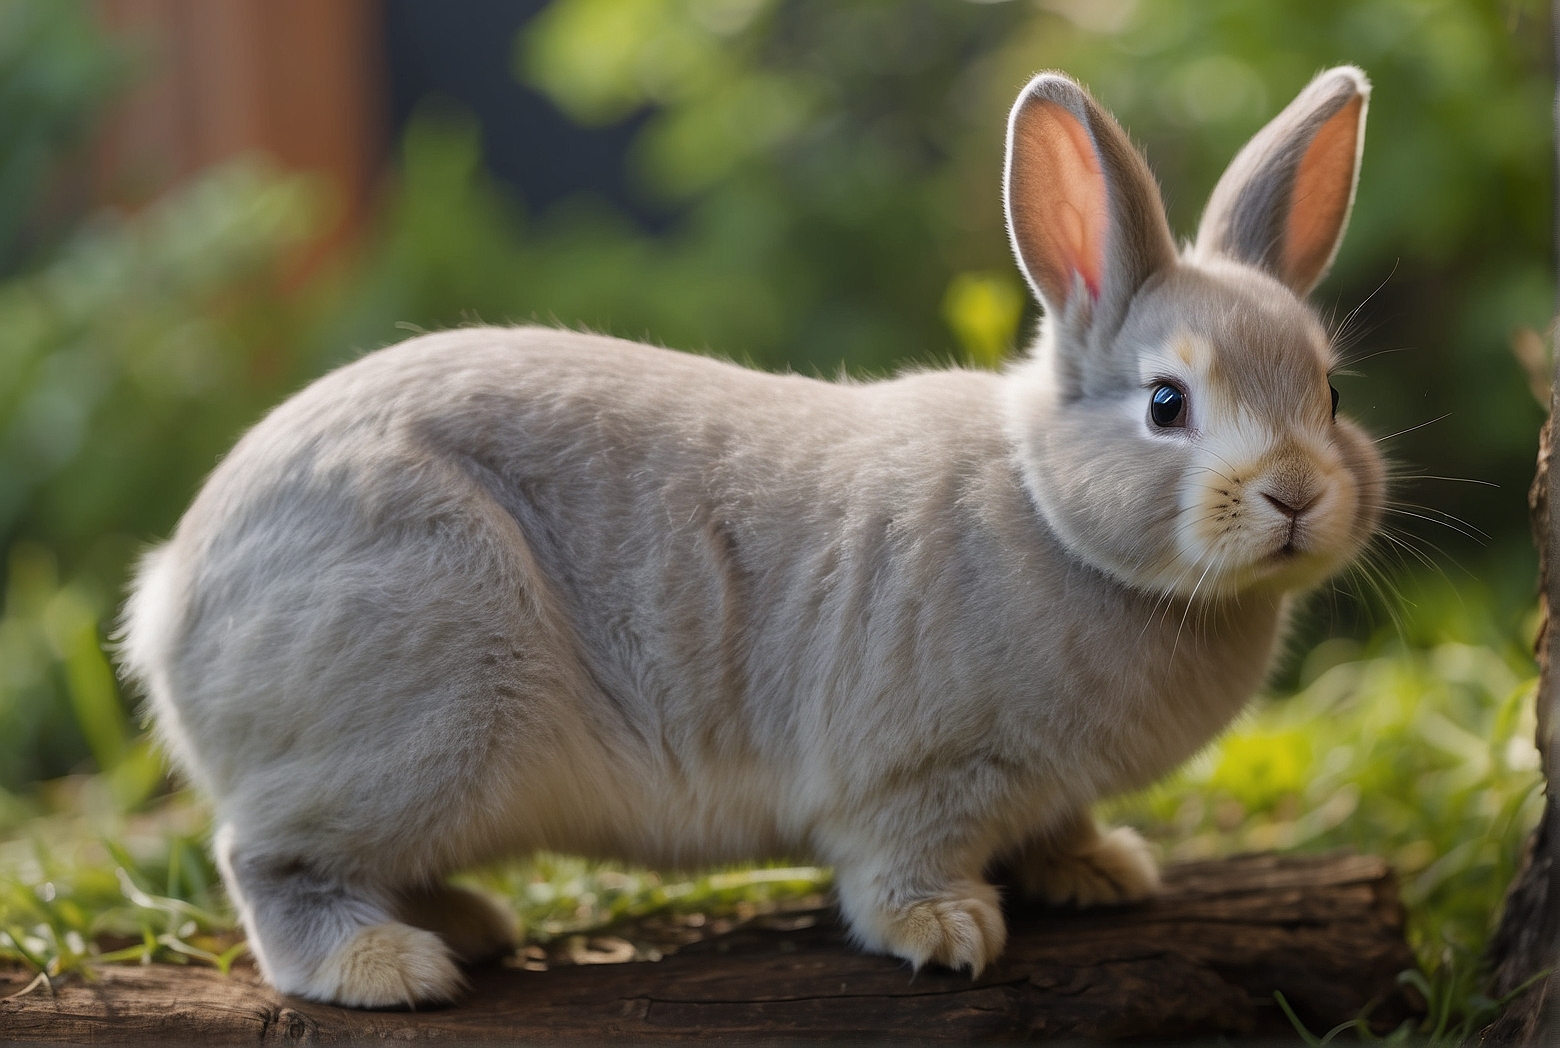 Netherland Dwarf Rabbit: Male or Female?